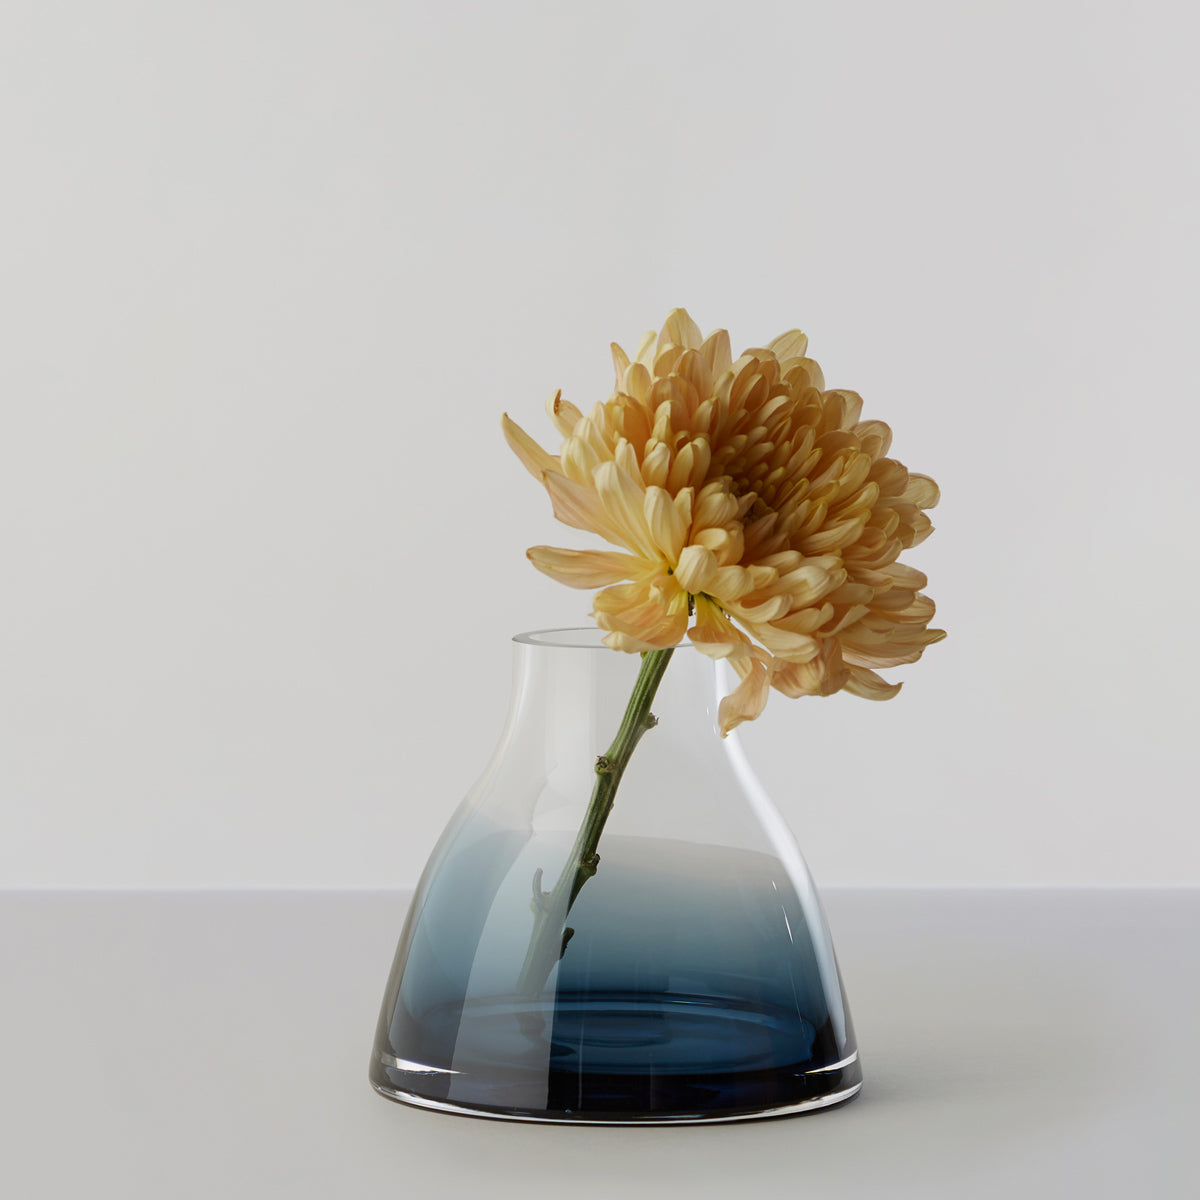 RO Collection Flower Vase No1 Indigo Blue